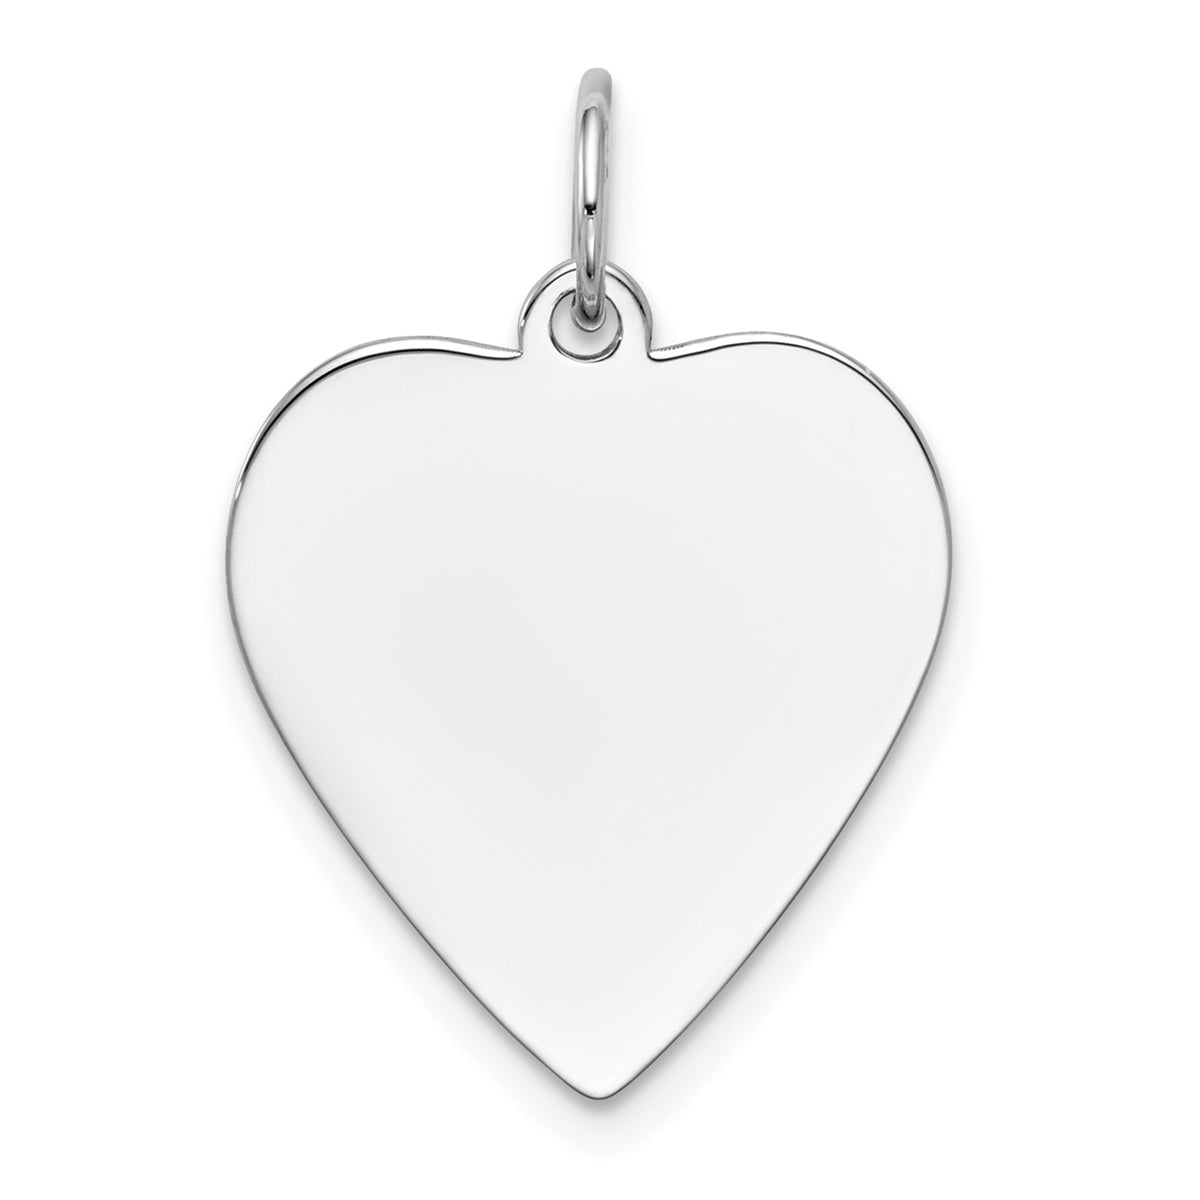 14K White Gold Plain .035 Gauge Engravable Heart Charm